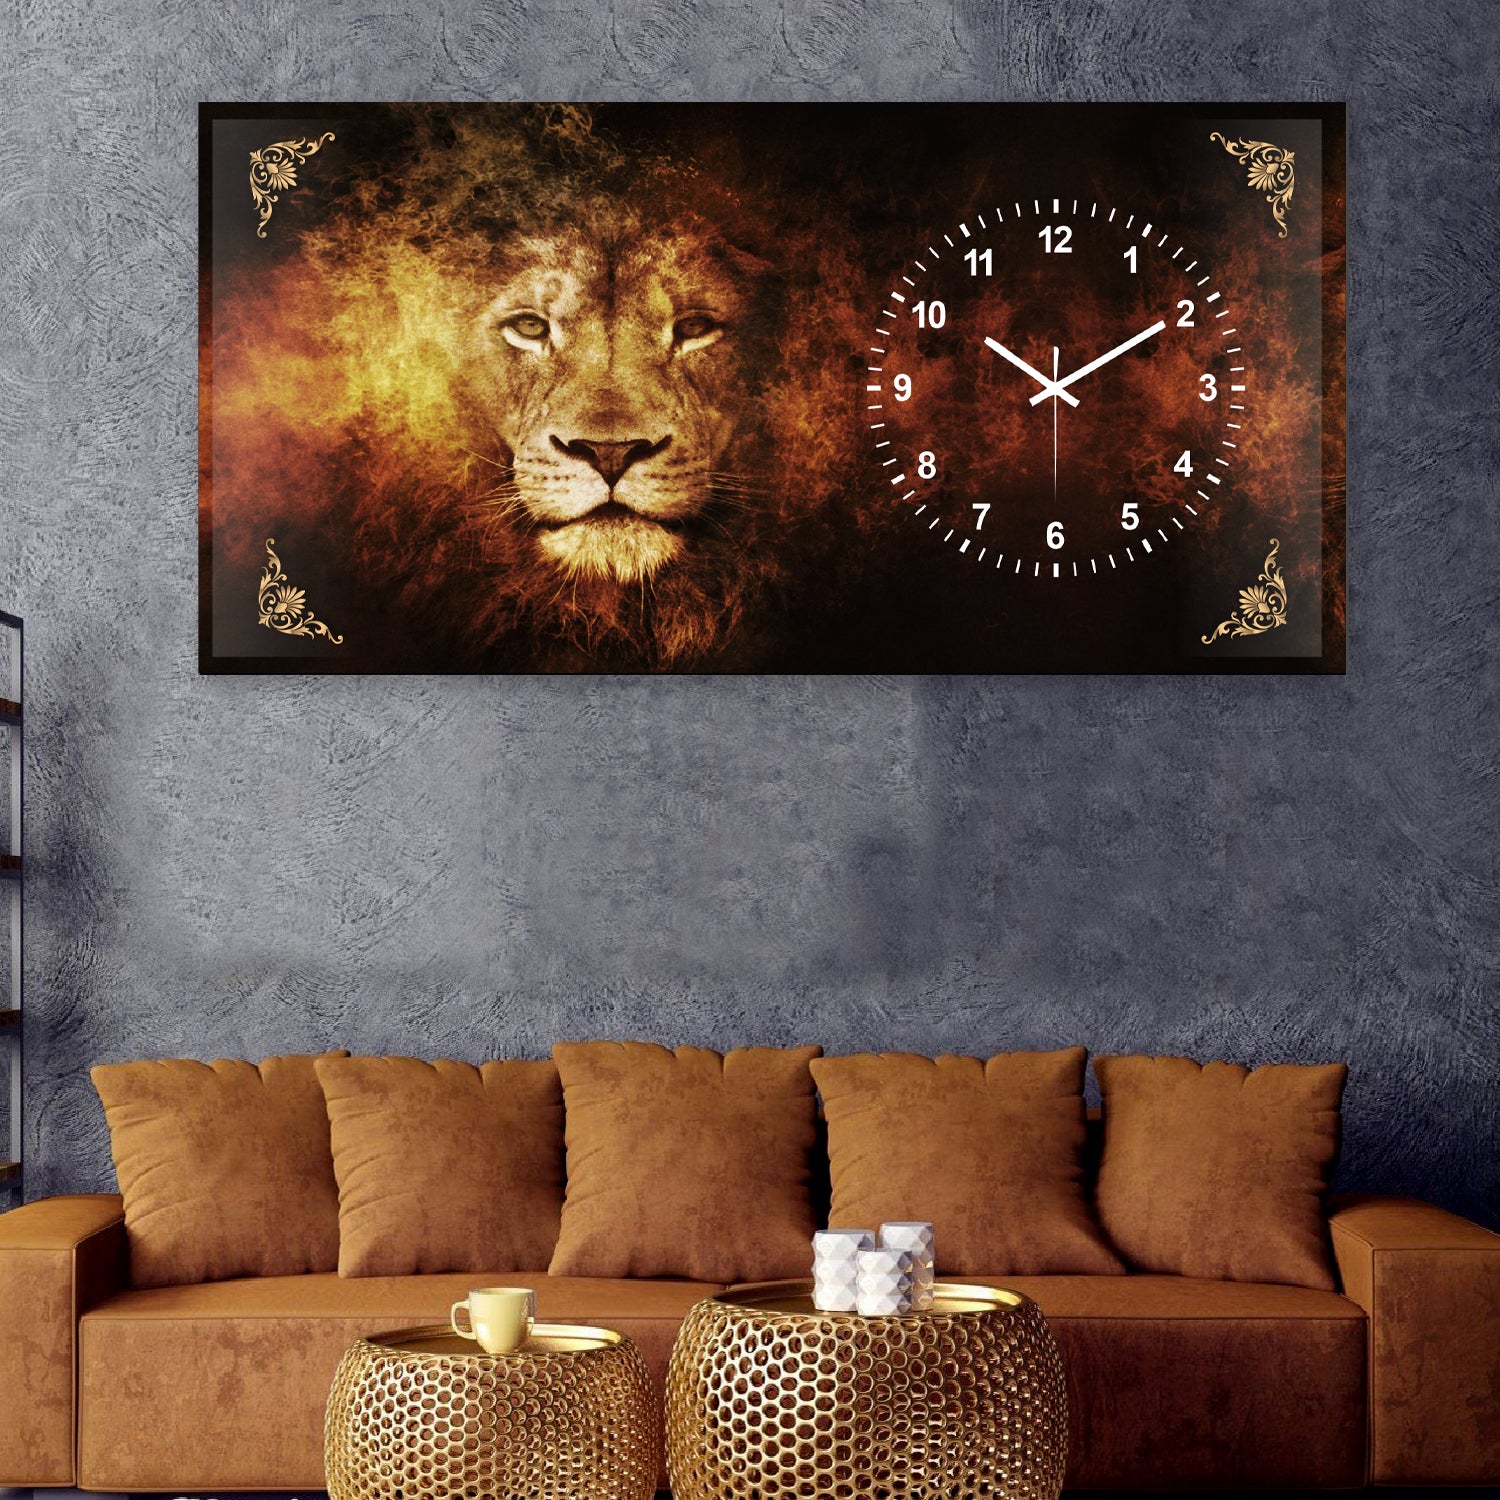 Lion - Digital Wall Clock